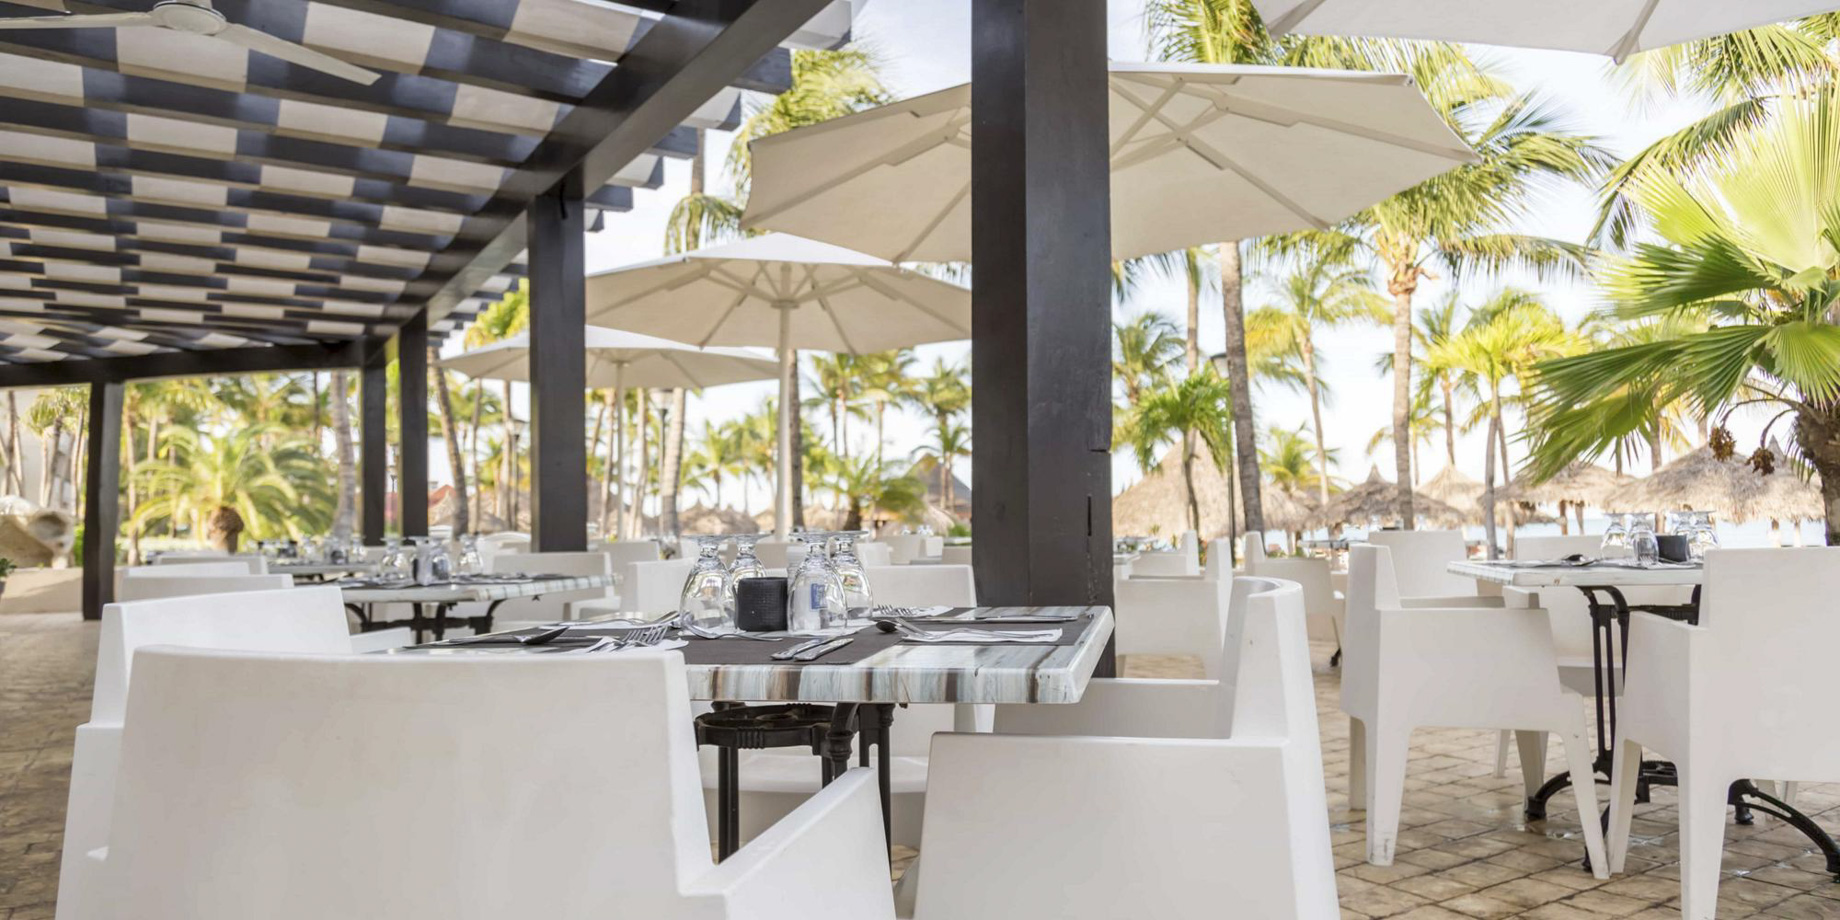 Barceló Aruba Palm Beach Resort – Noord, Aruba – Beach Resort Club Restaurant